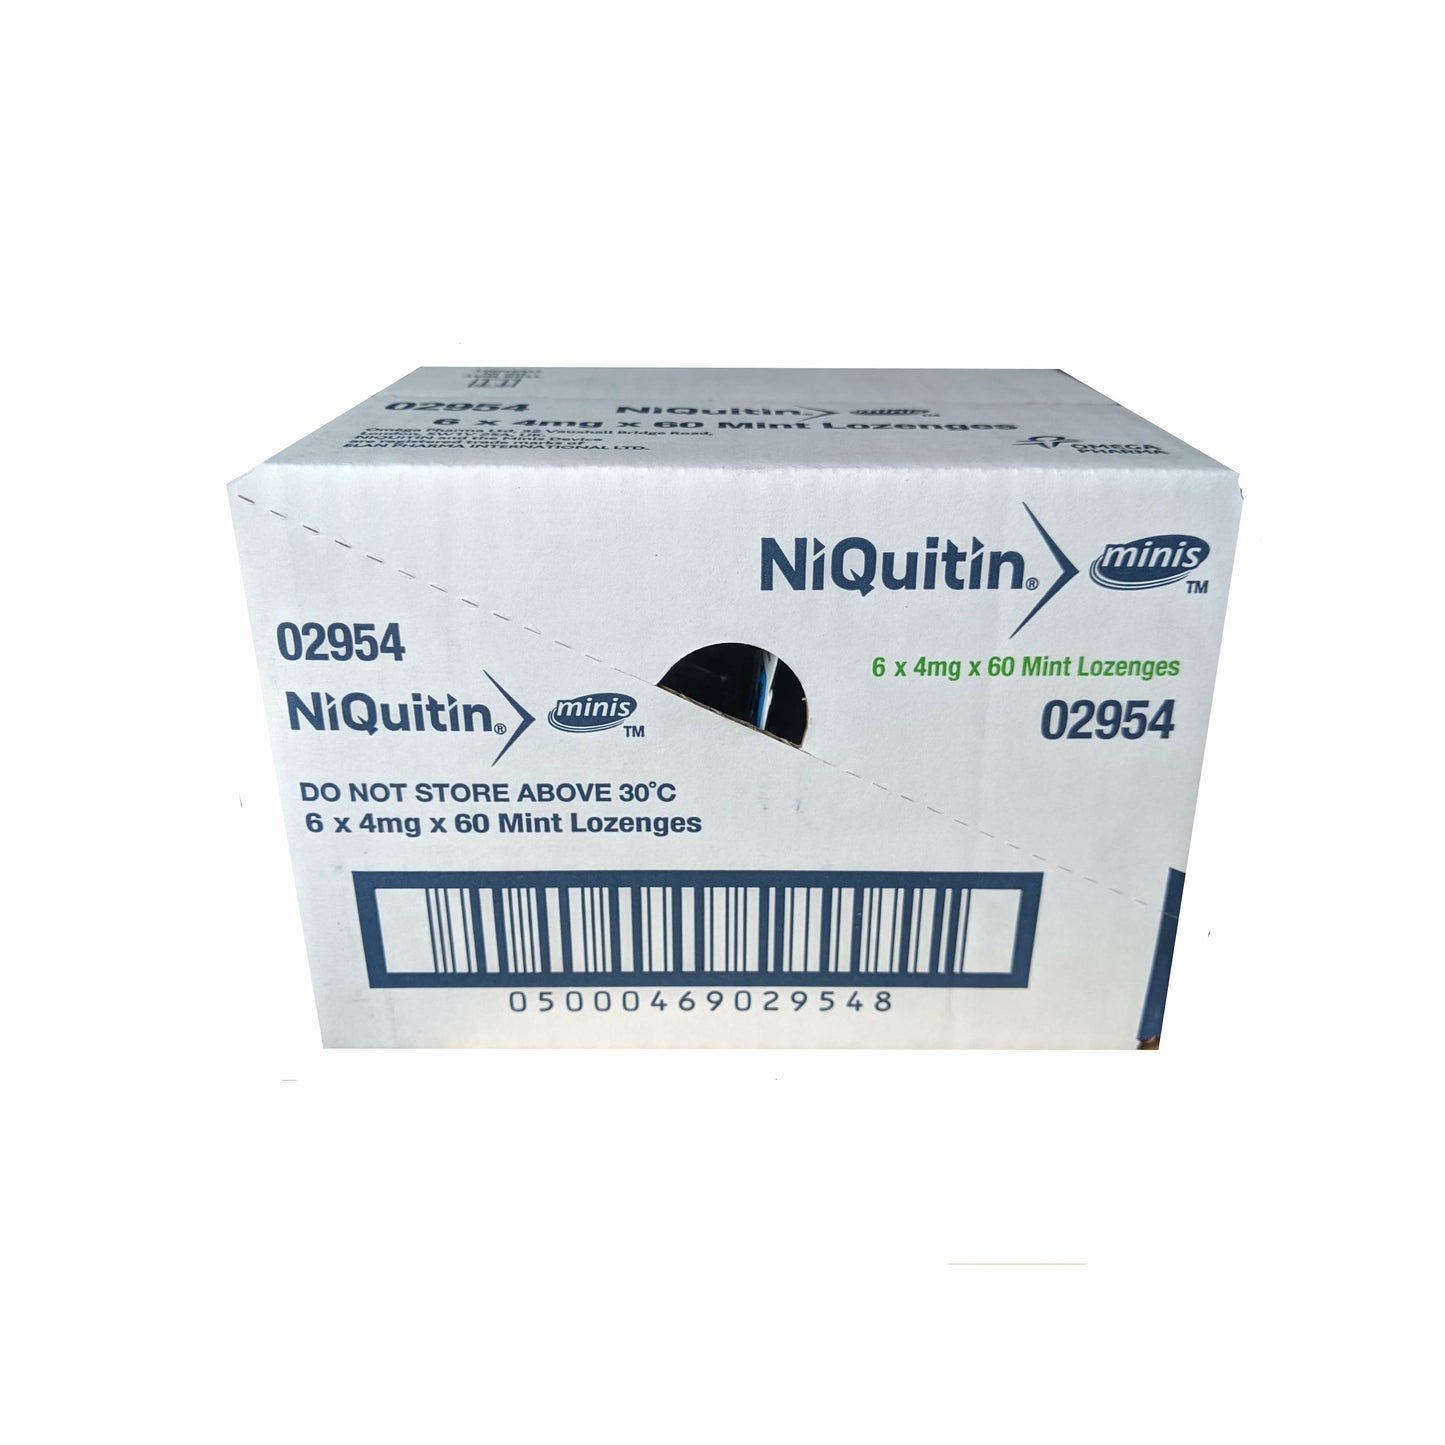 NiQuitin Minis 4mg Mint 60 Lozenges (3x20) - BOX OF 6